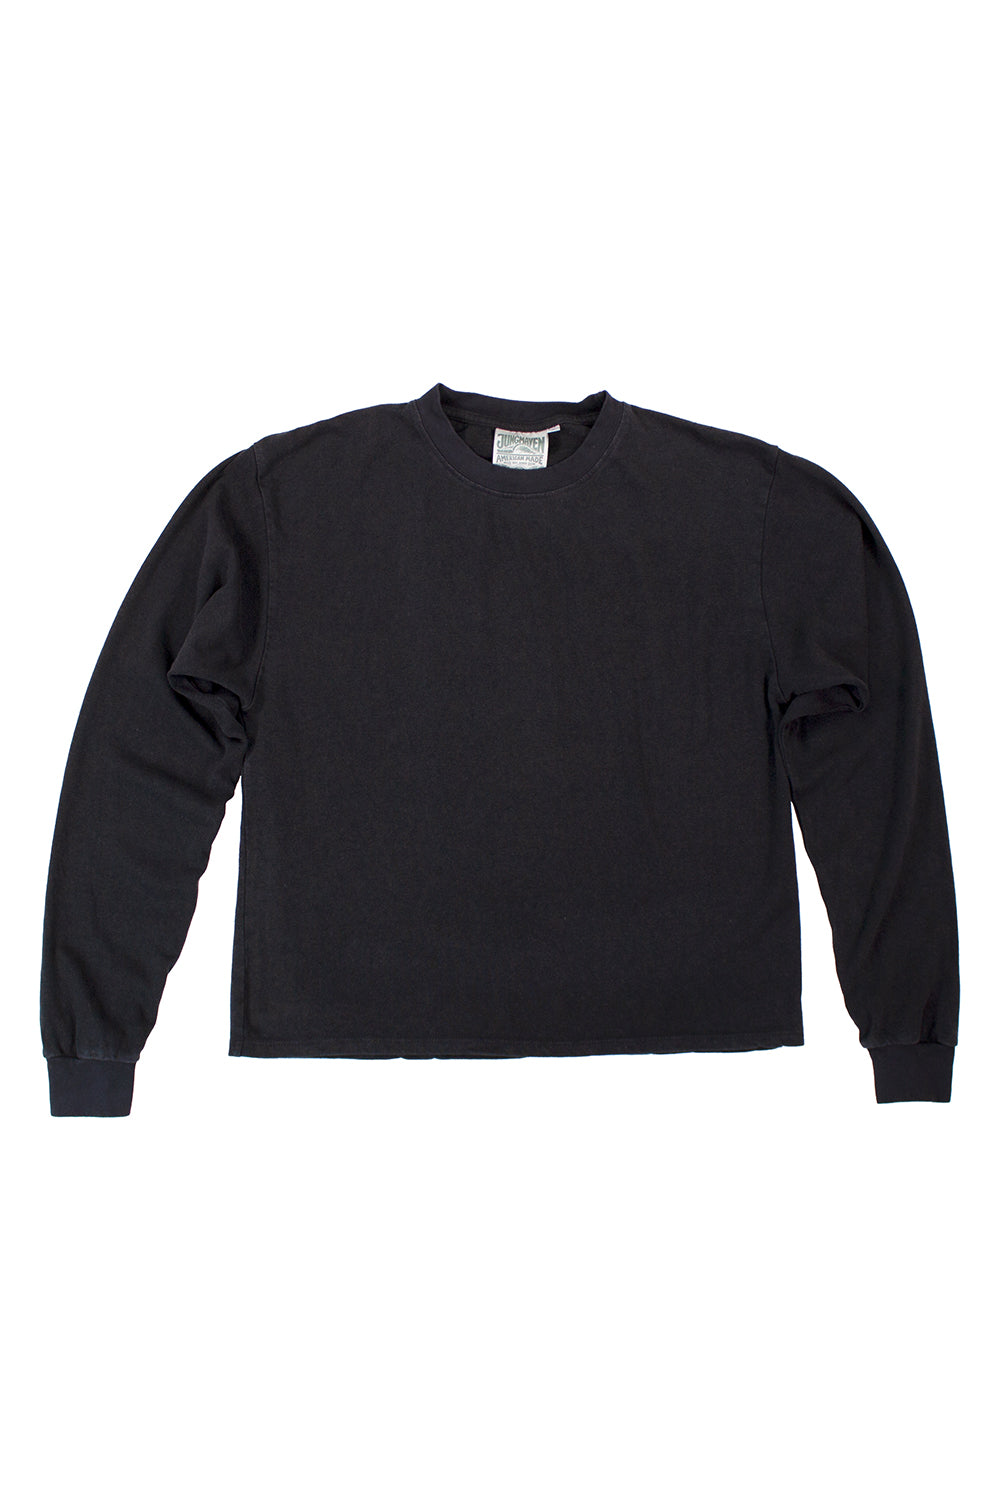 Tatoosh Cropped Long Sleeve Tee | Jungmaven Hemp Clothing & Accessories / Color: Black